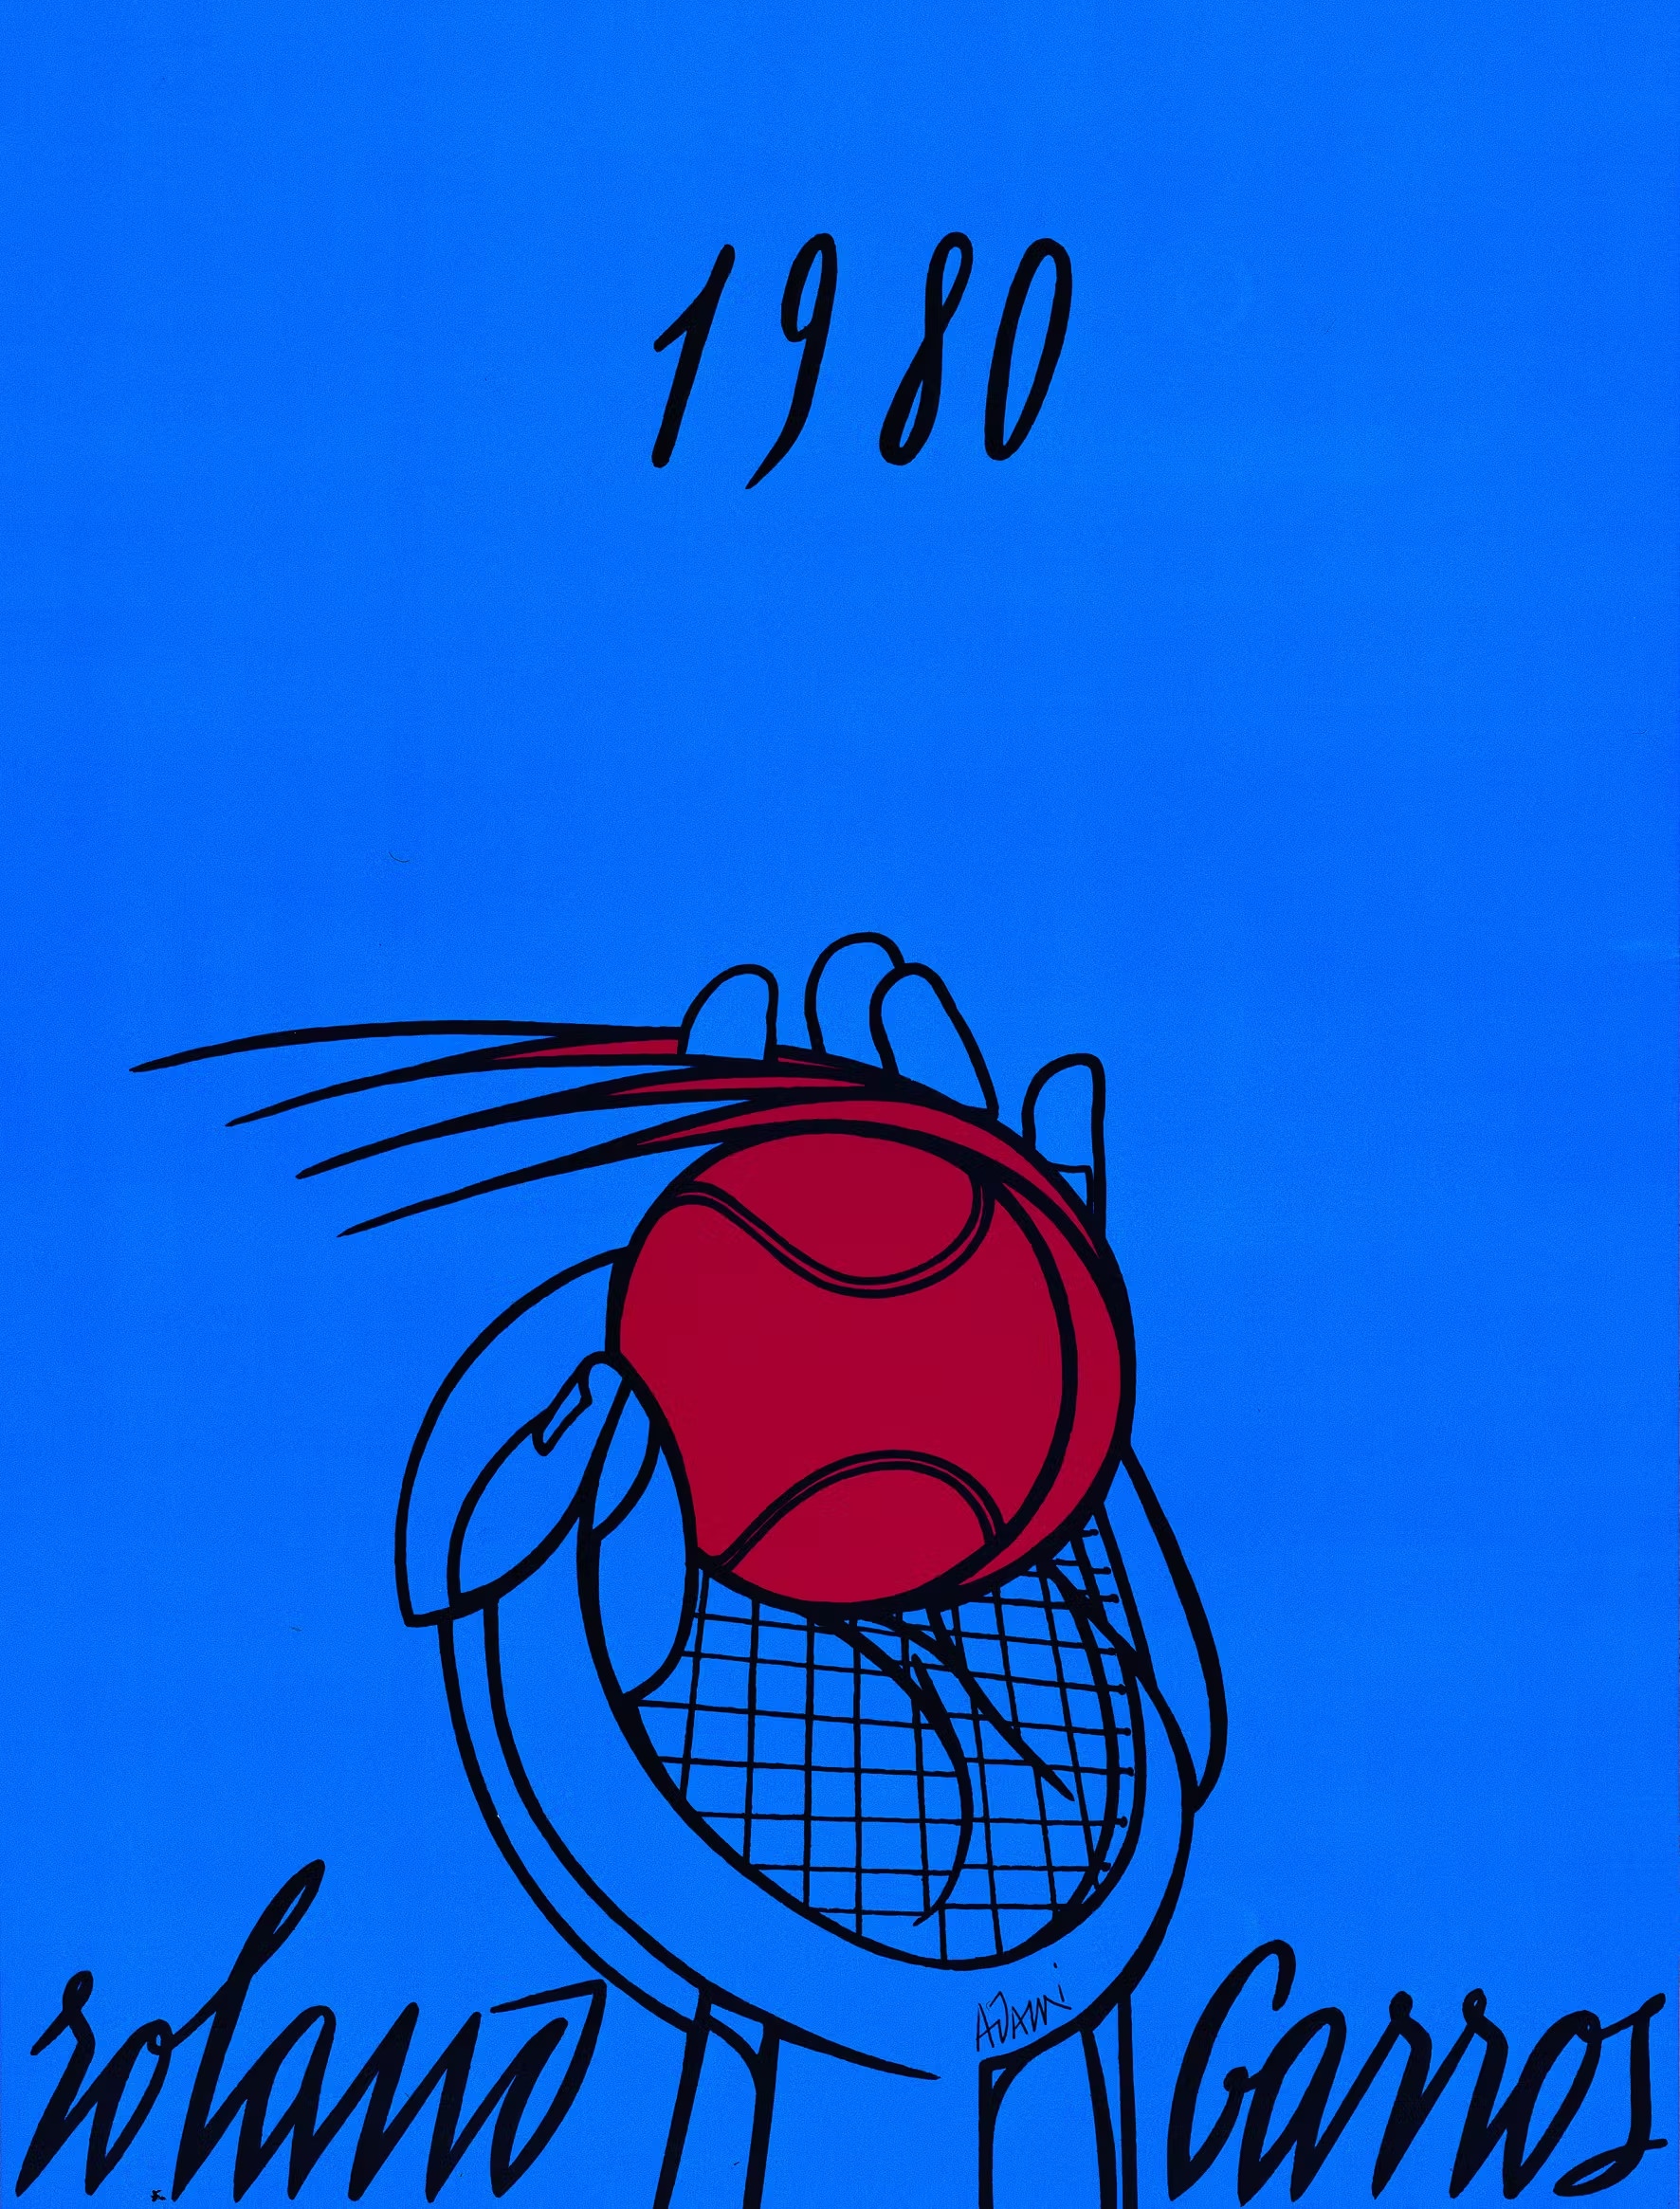 Roland Garros 1980 poster